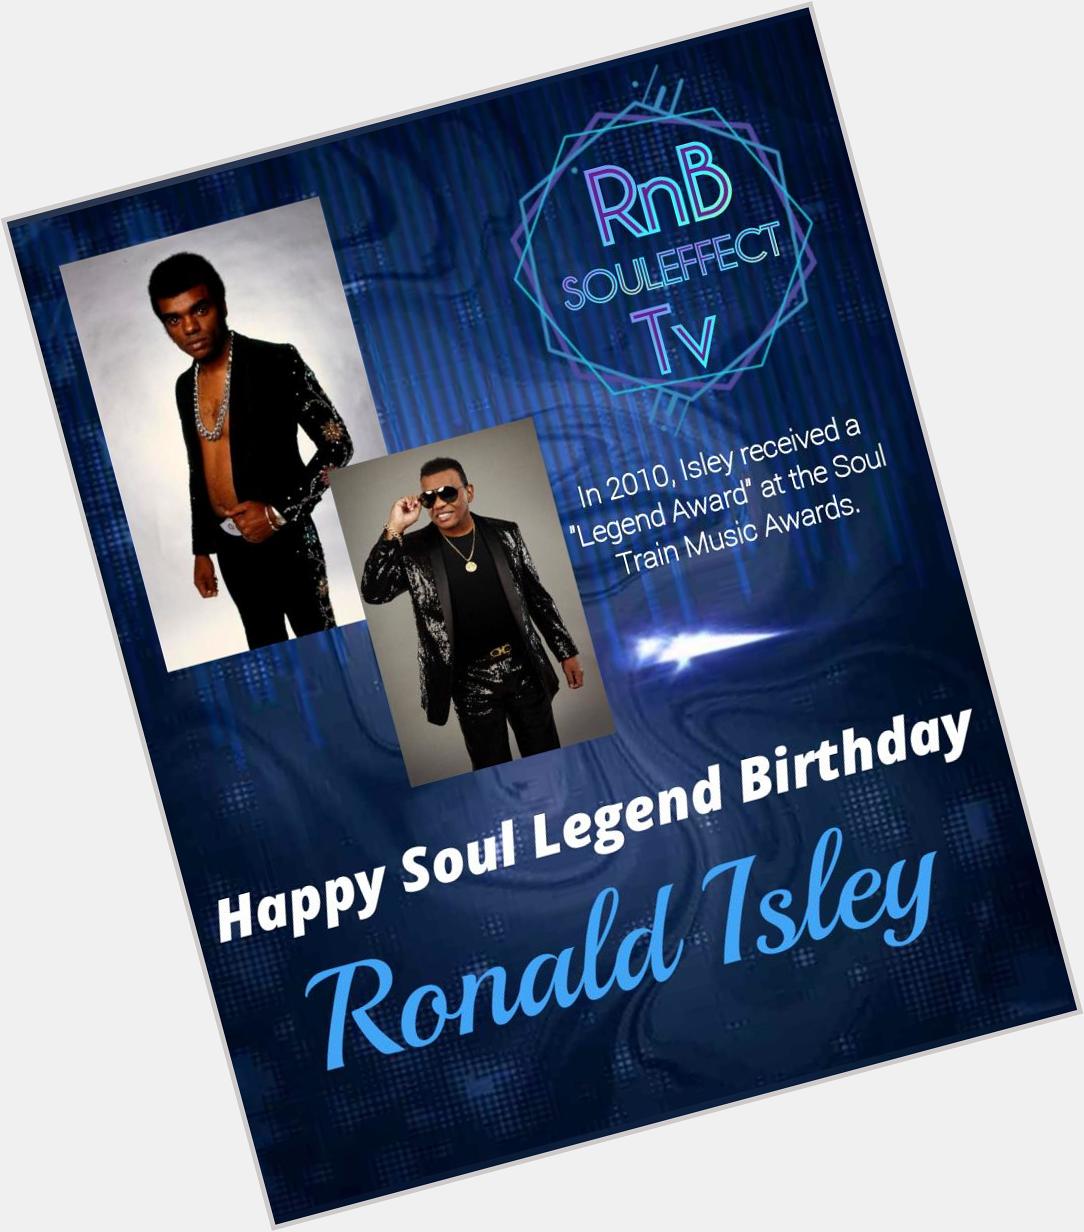 Happy Soul Legend Birthday 
Ronald Isley 